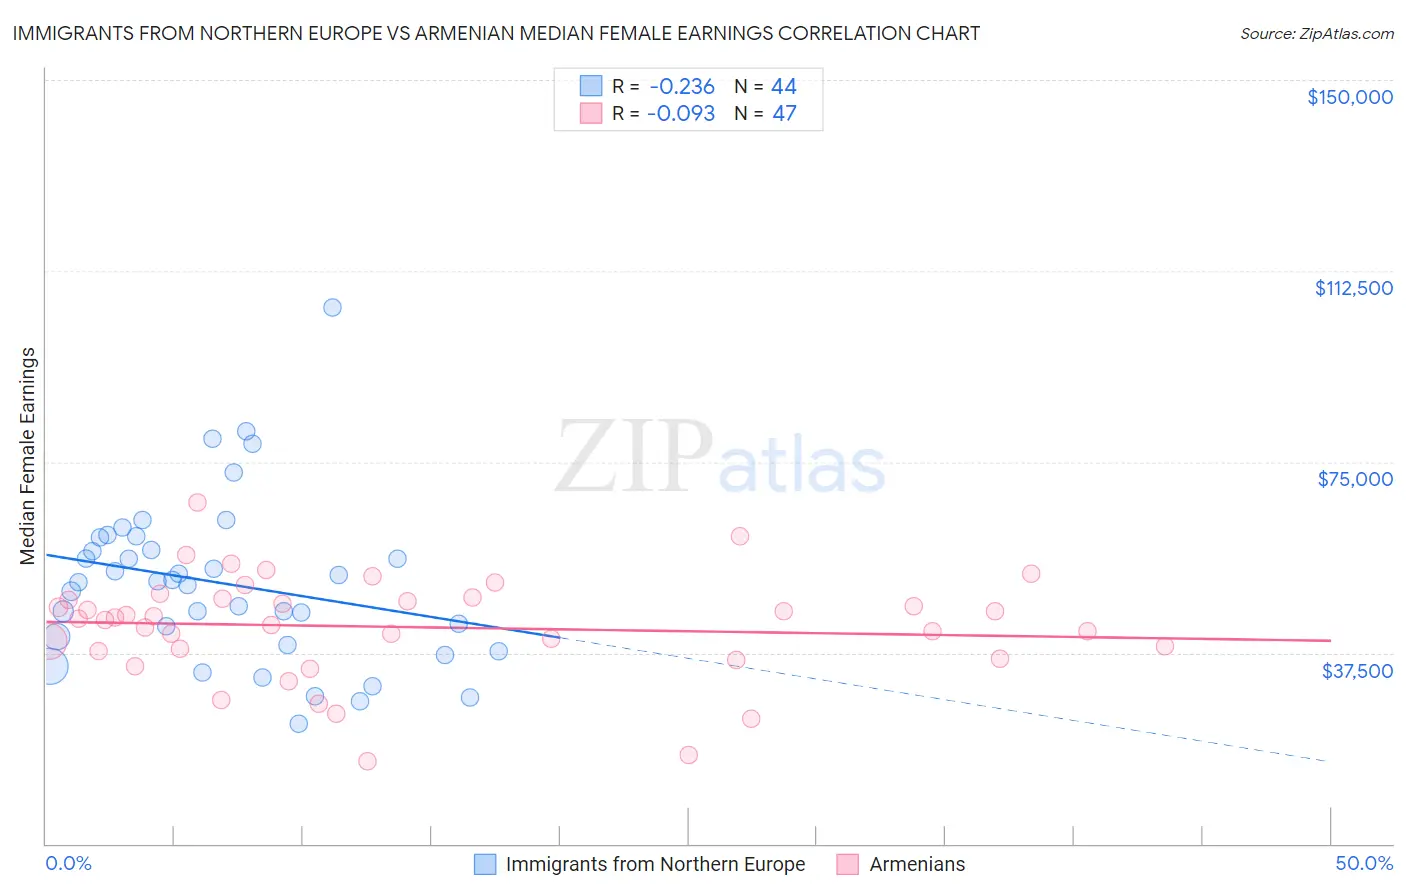 Immigrants from Northern Europe vs Armenian Median Female Earnings